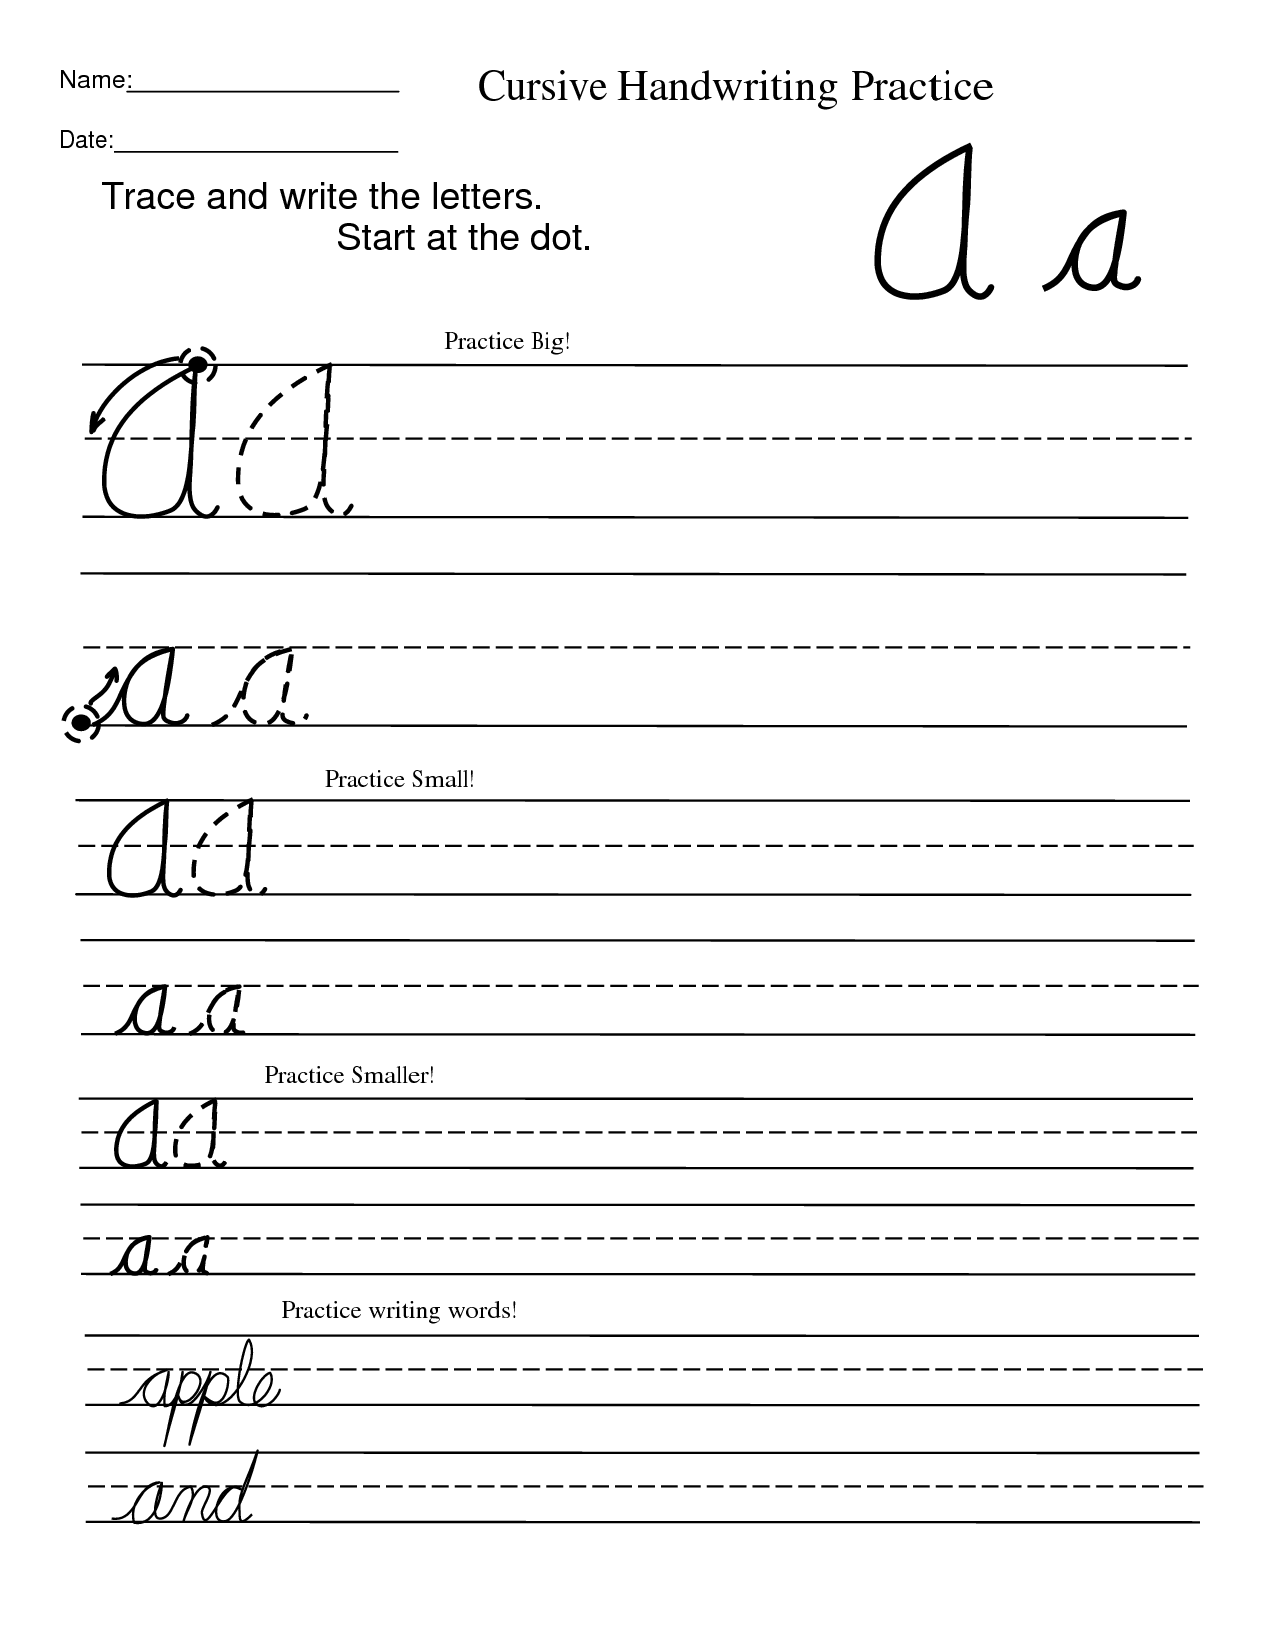 practice-cursive-writing-worksheet-free-printable-educational-worksheet